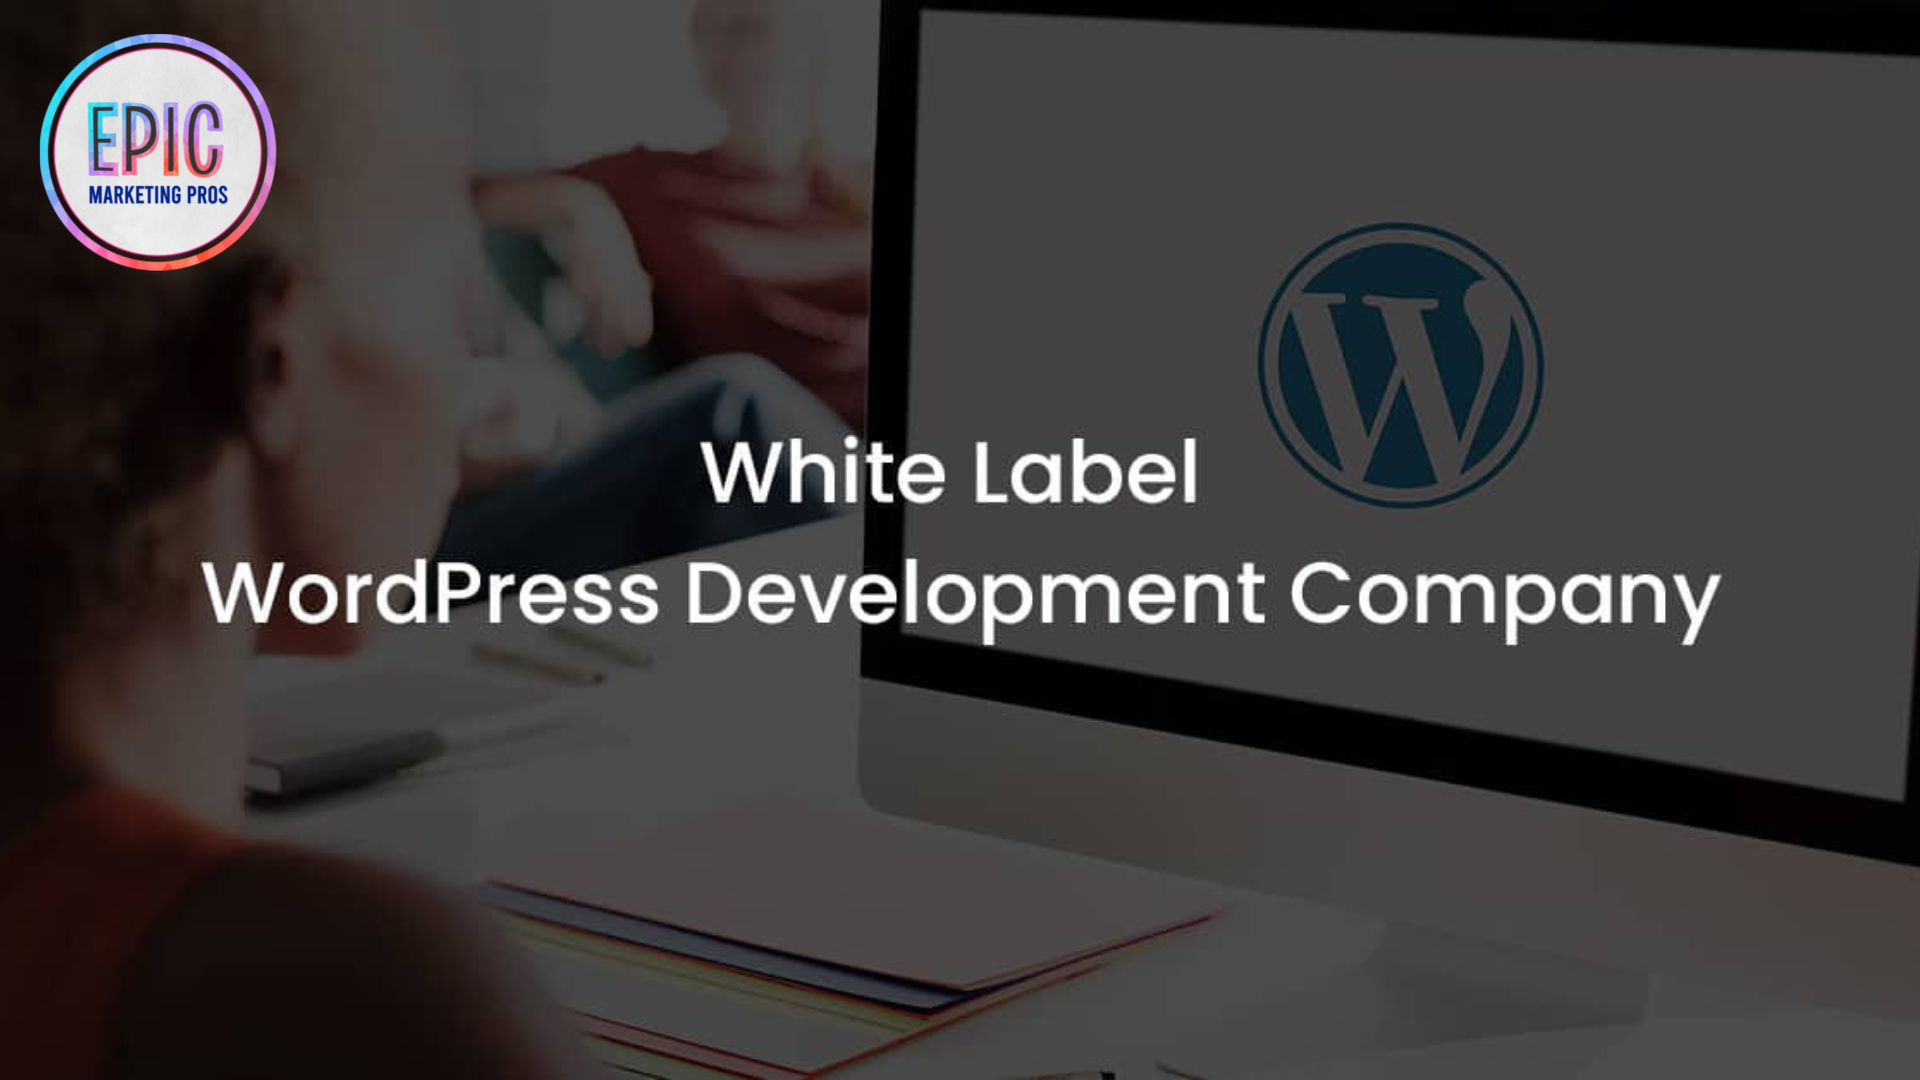 WordPress support company white label